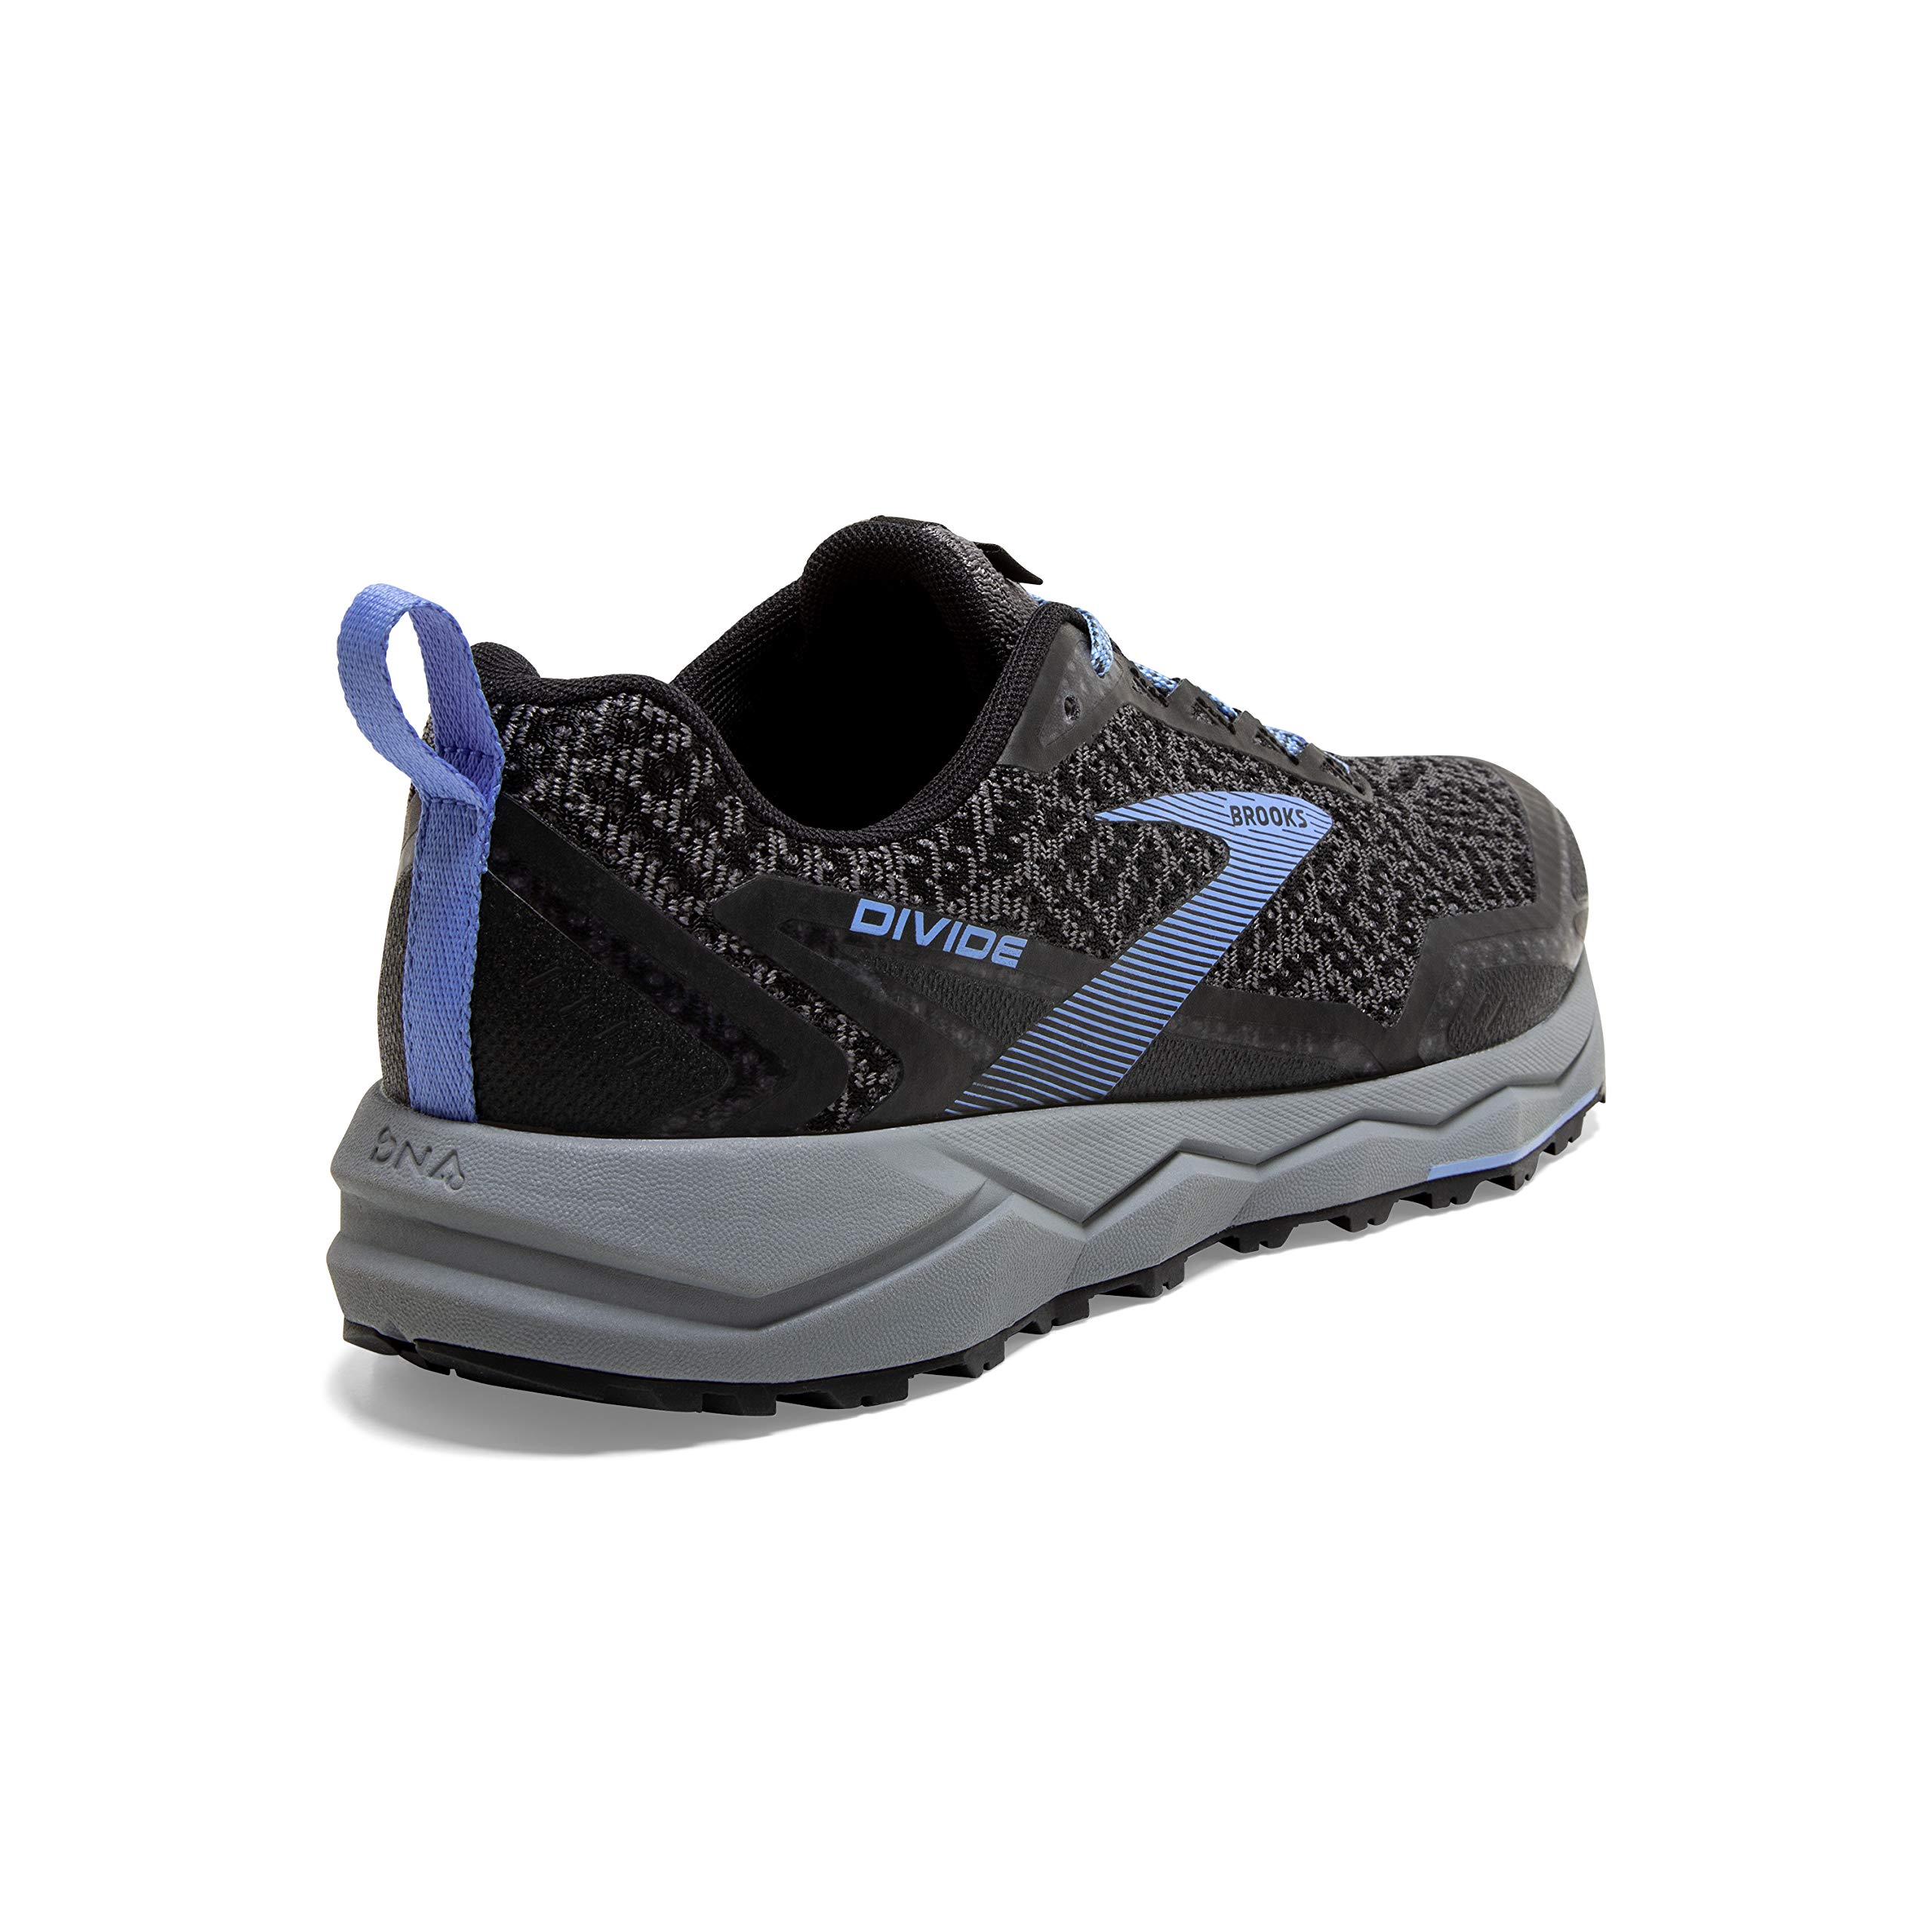 Brooks Womens Divide Running Shoe - Grey/Black/Cornflower Blue - B - 6.5